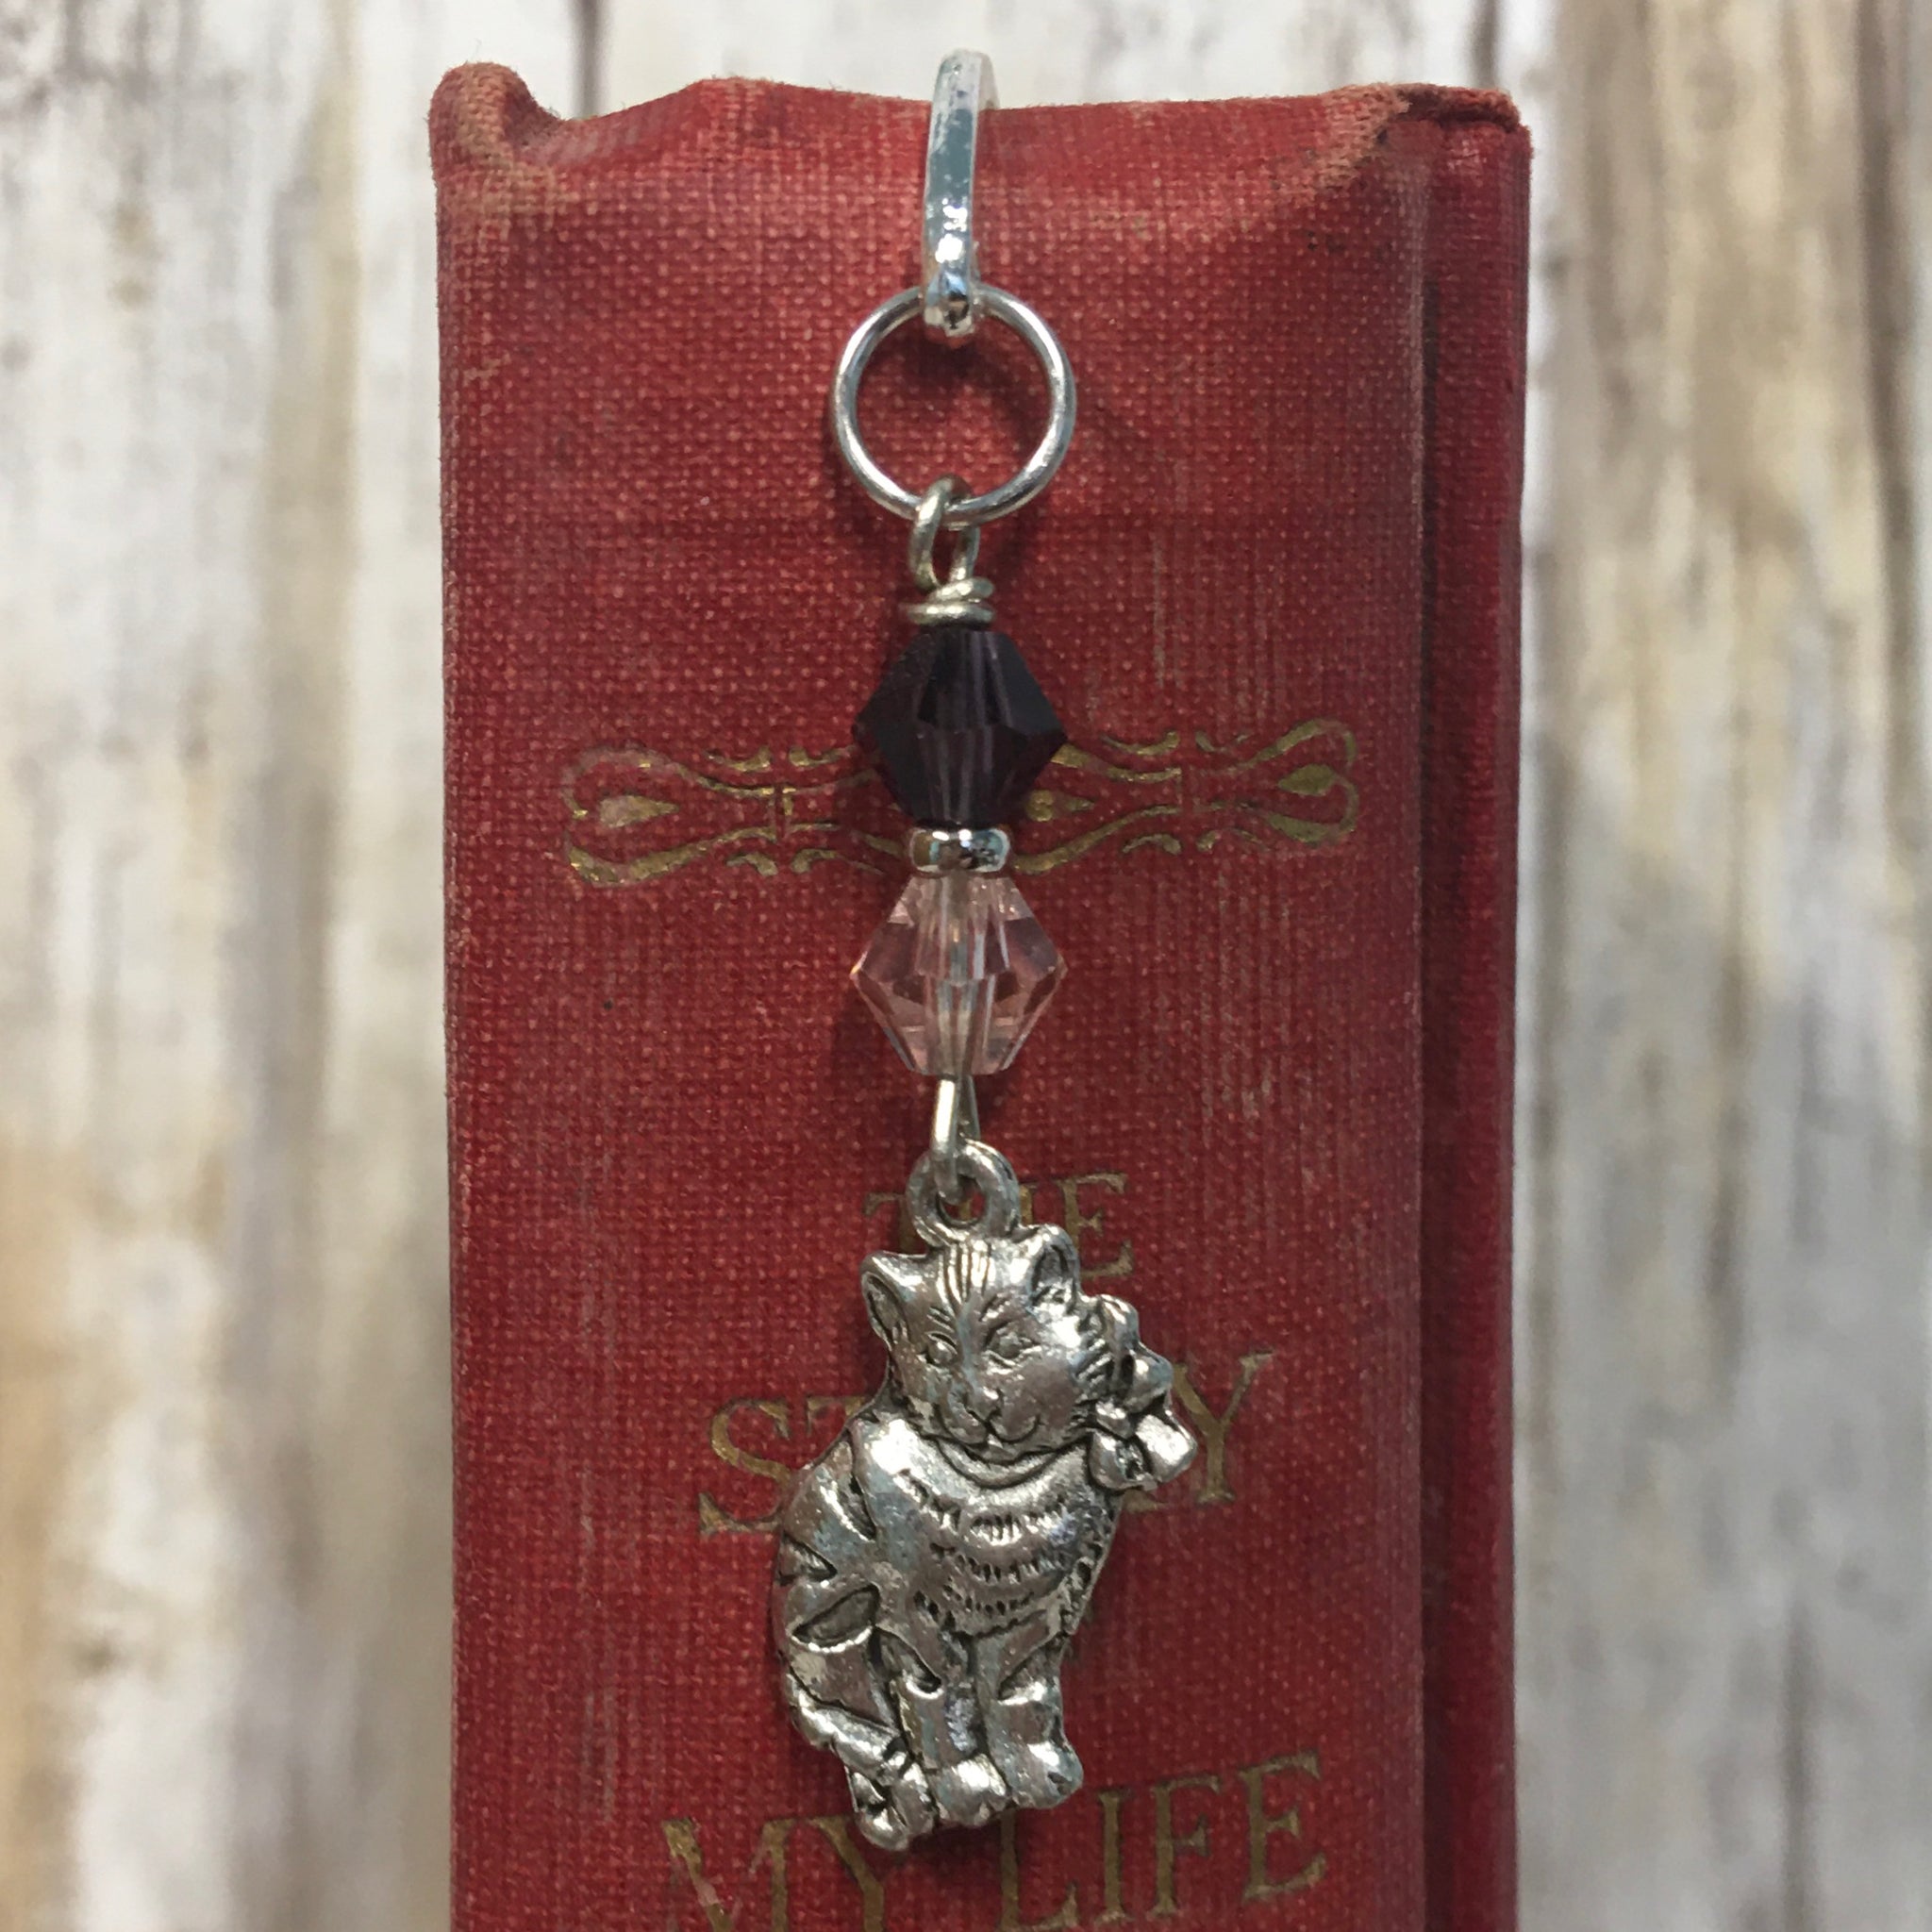 Alice in Wonderland Bookmarks - Hook Style with Swarovski Crystals & Charm